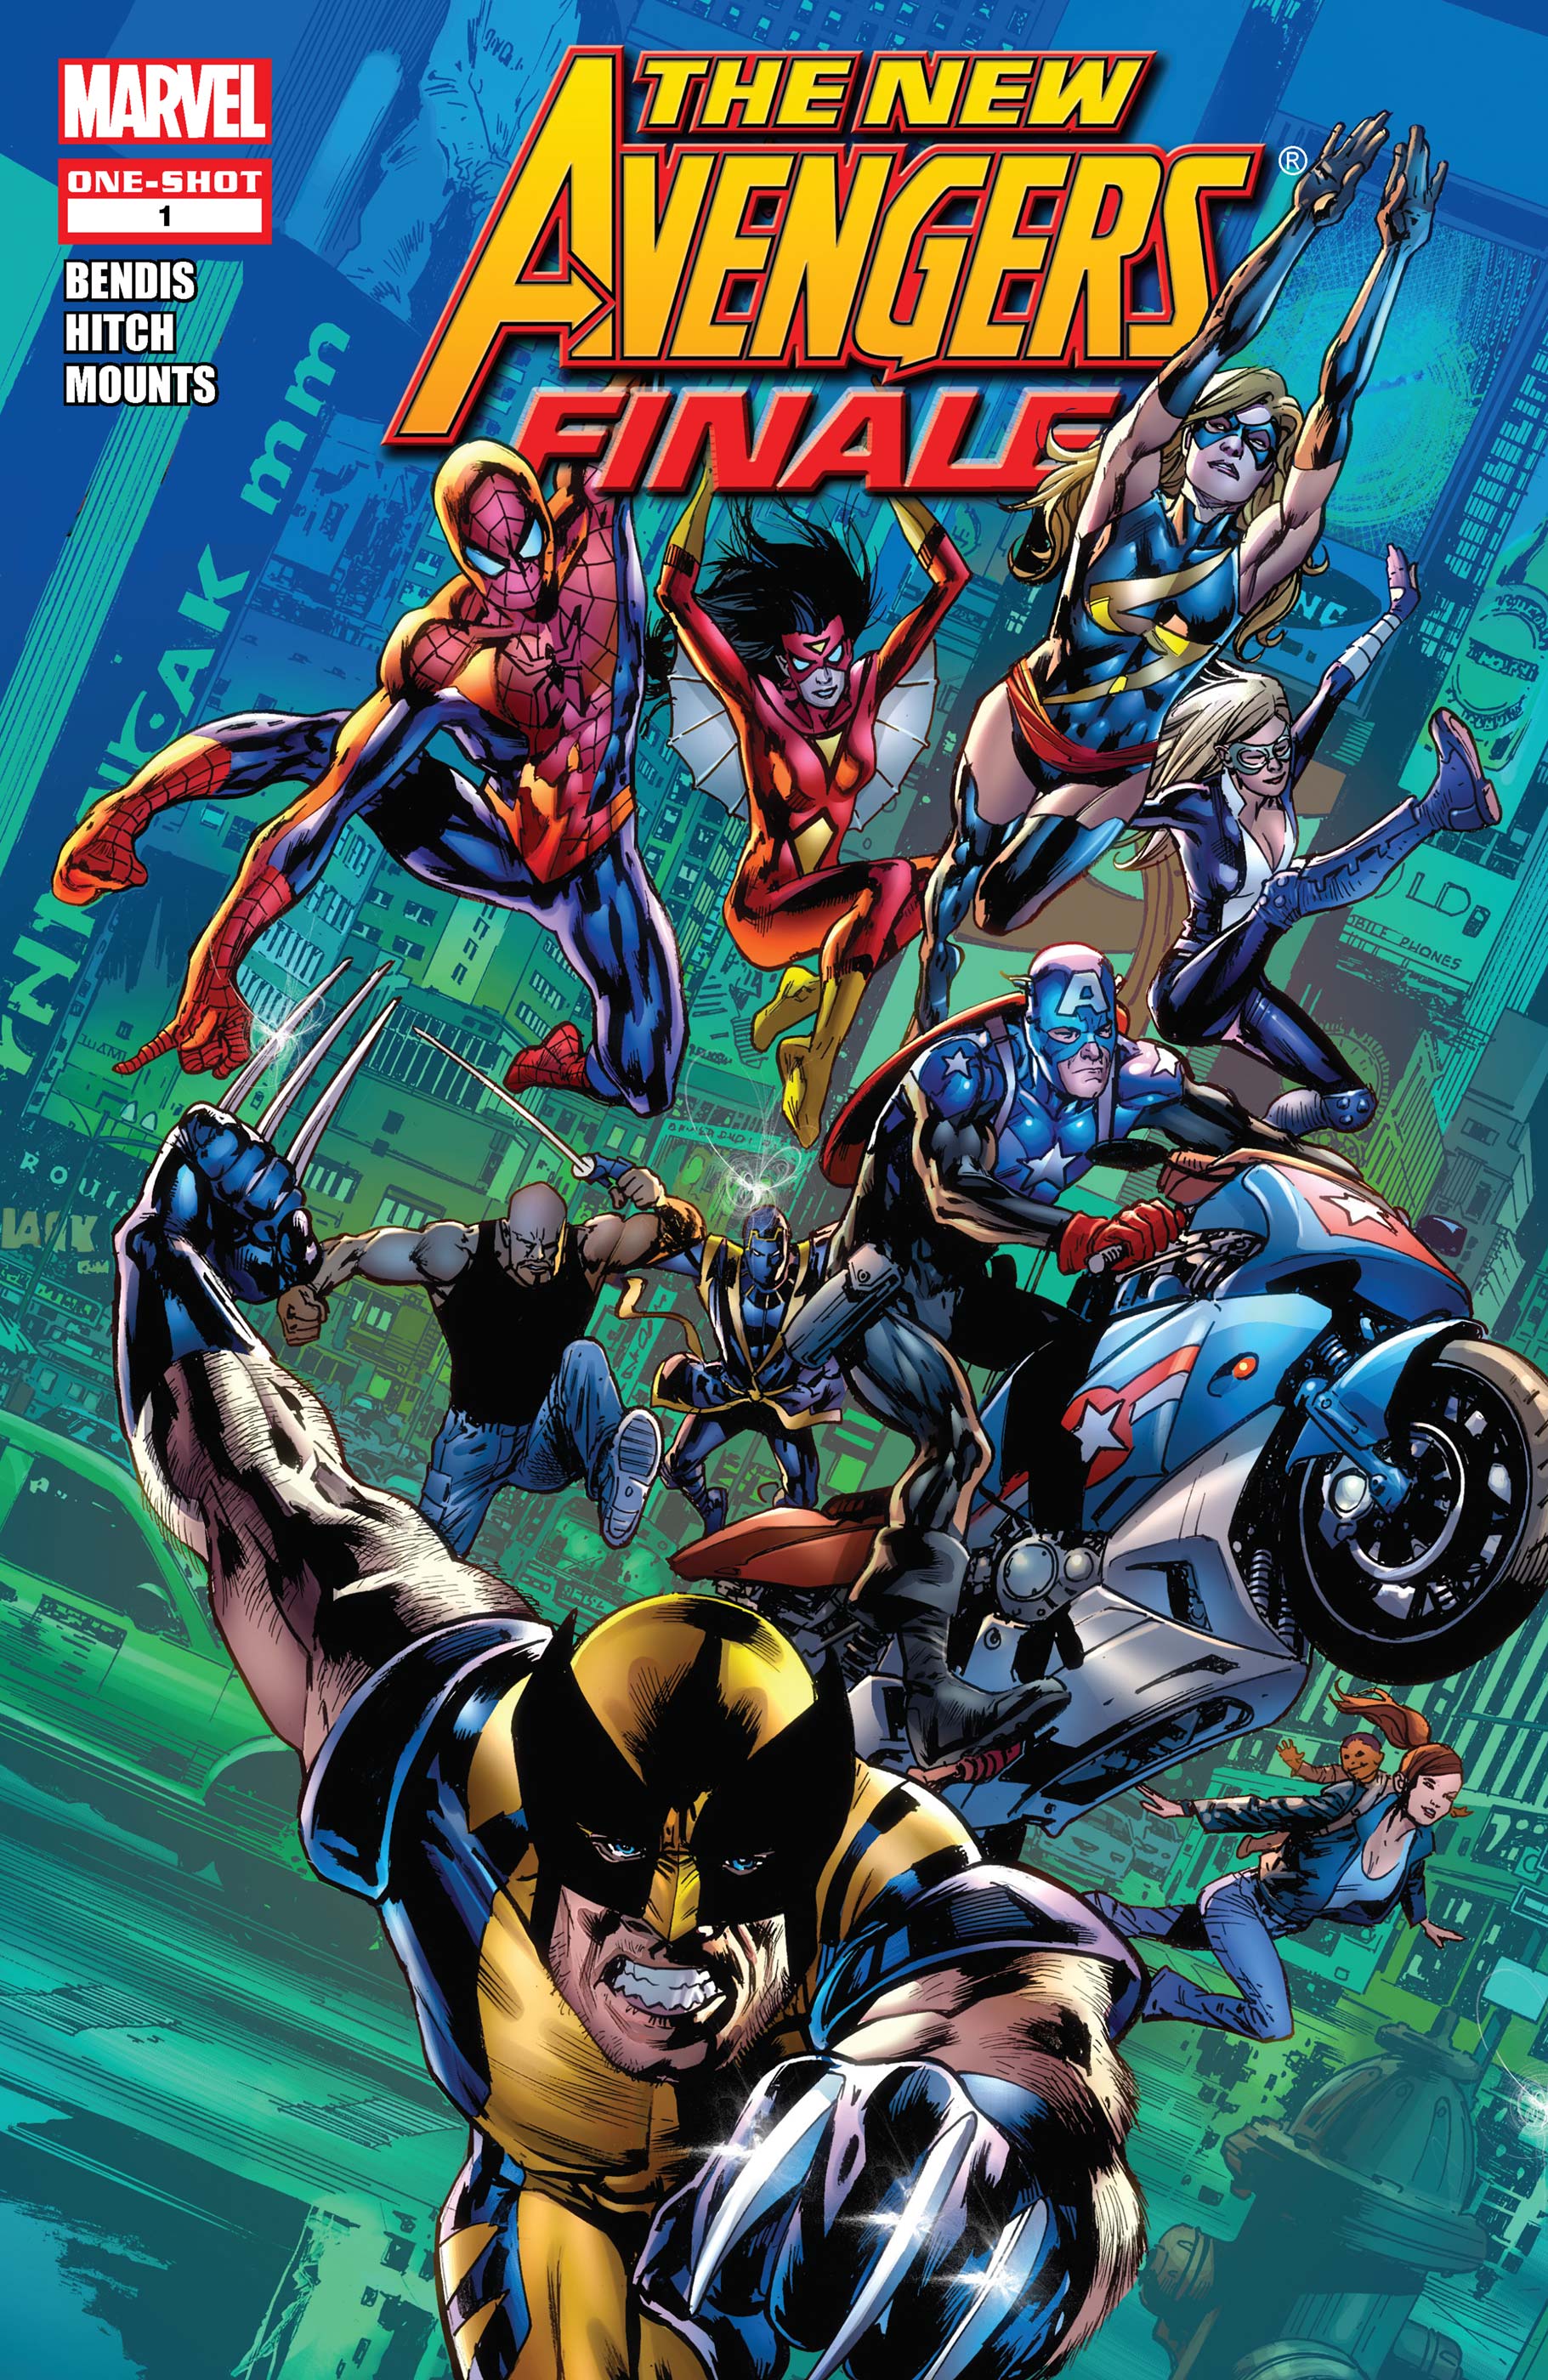 New Avengers Finale (2010) #1